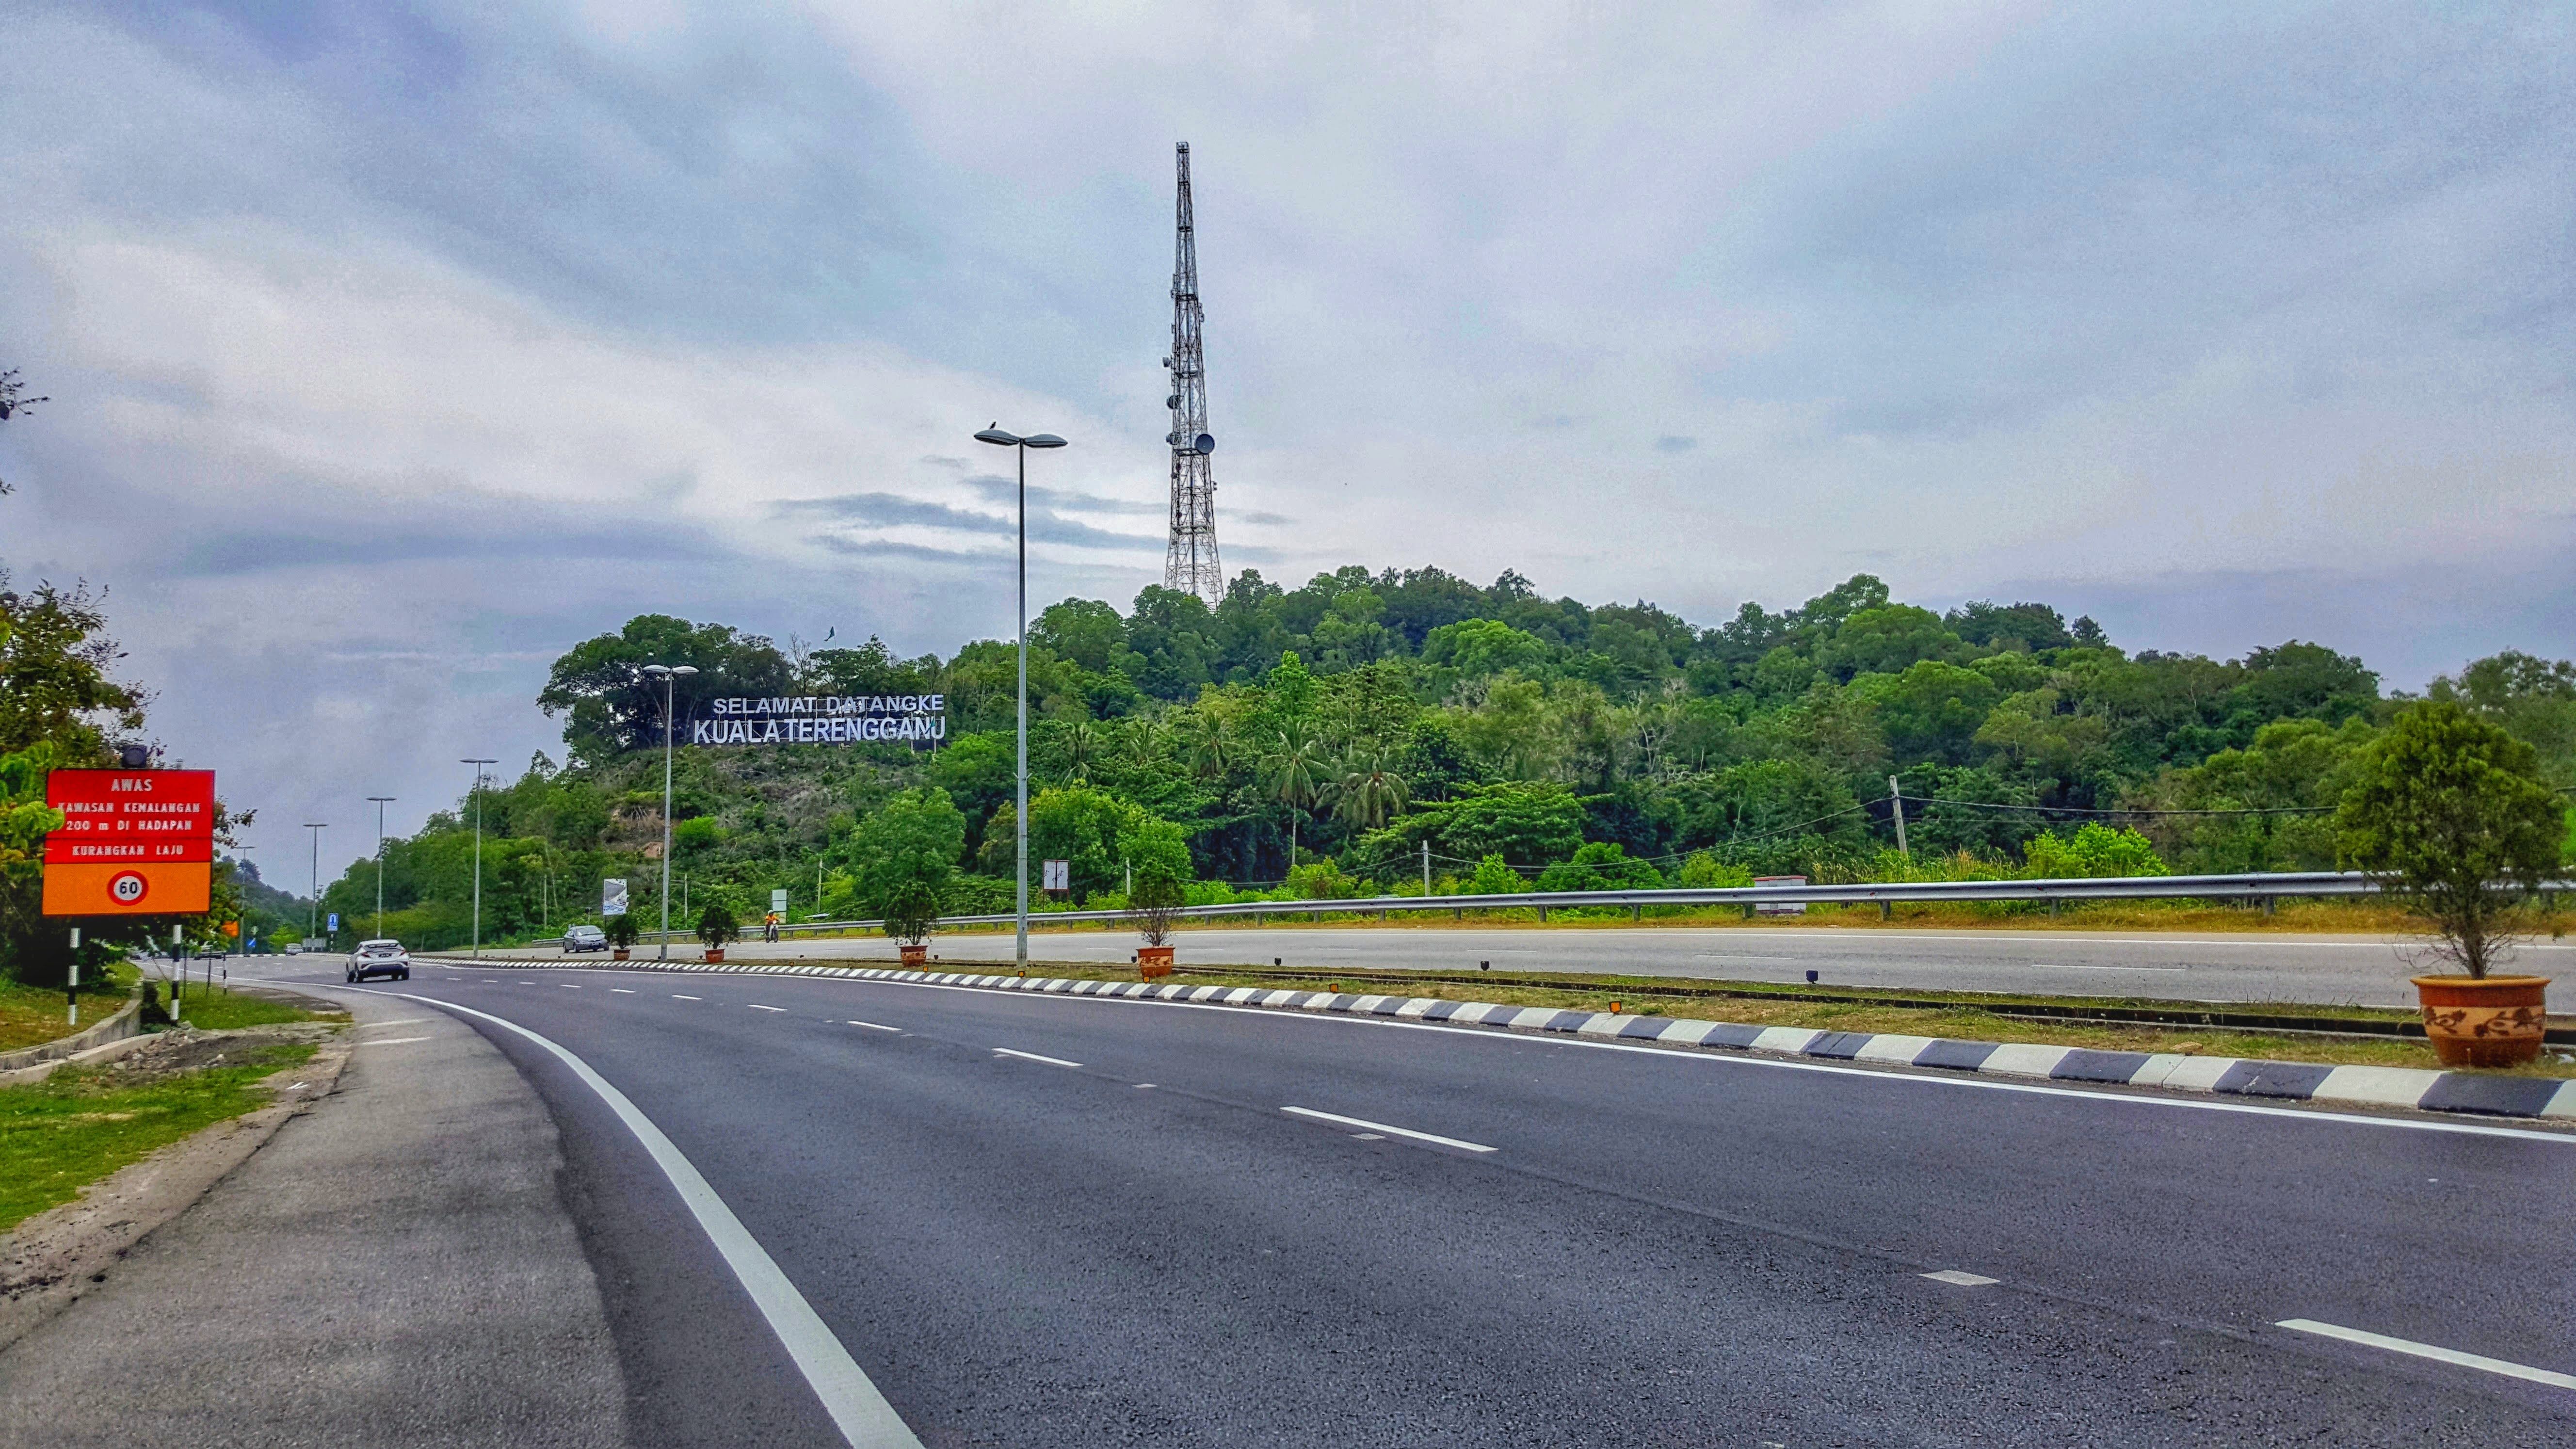 Welcome signage on highway entrance of Kuala Terengganu, Malaysia